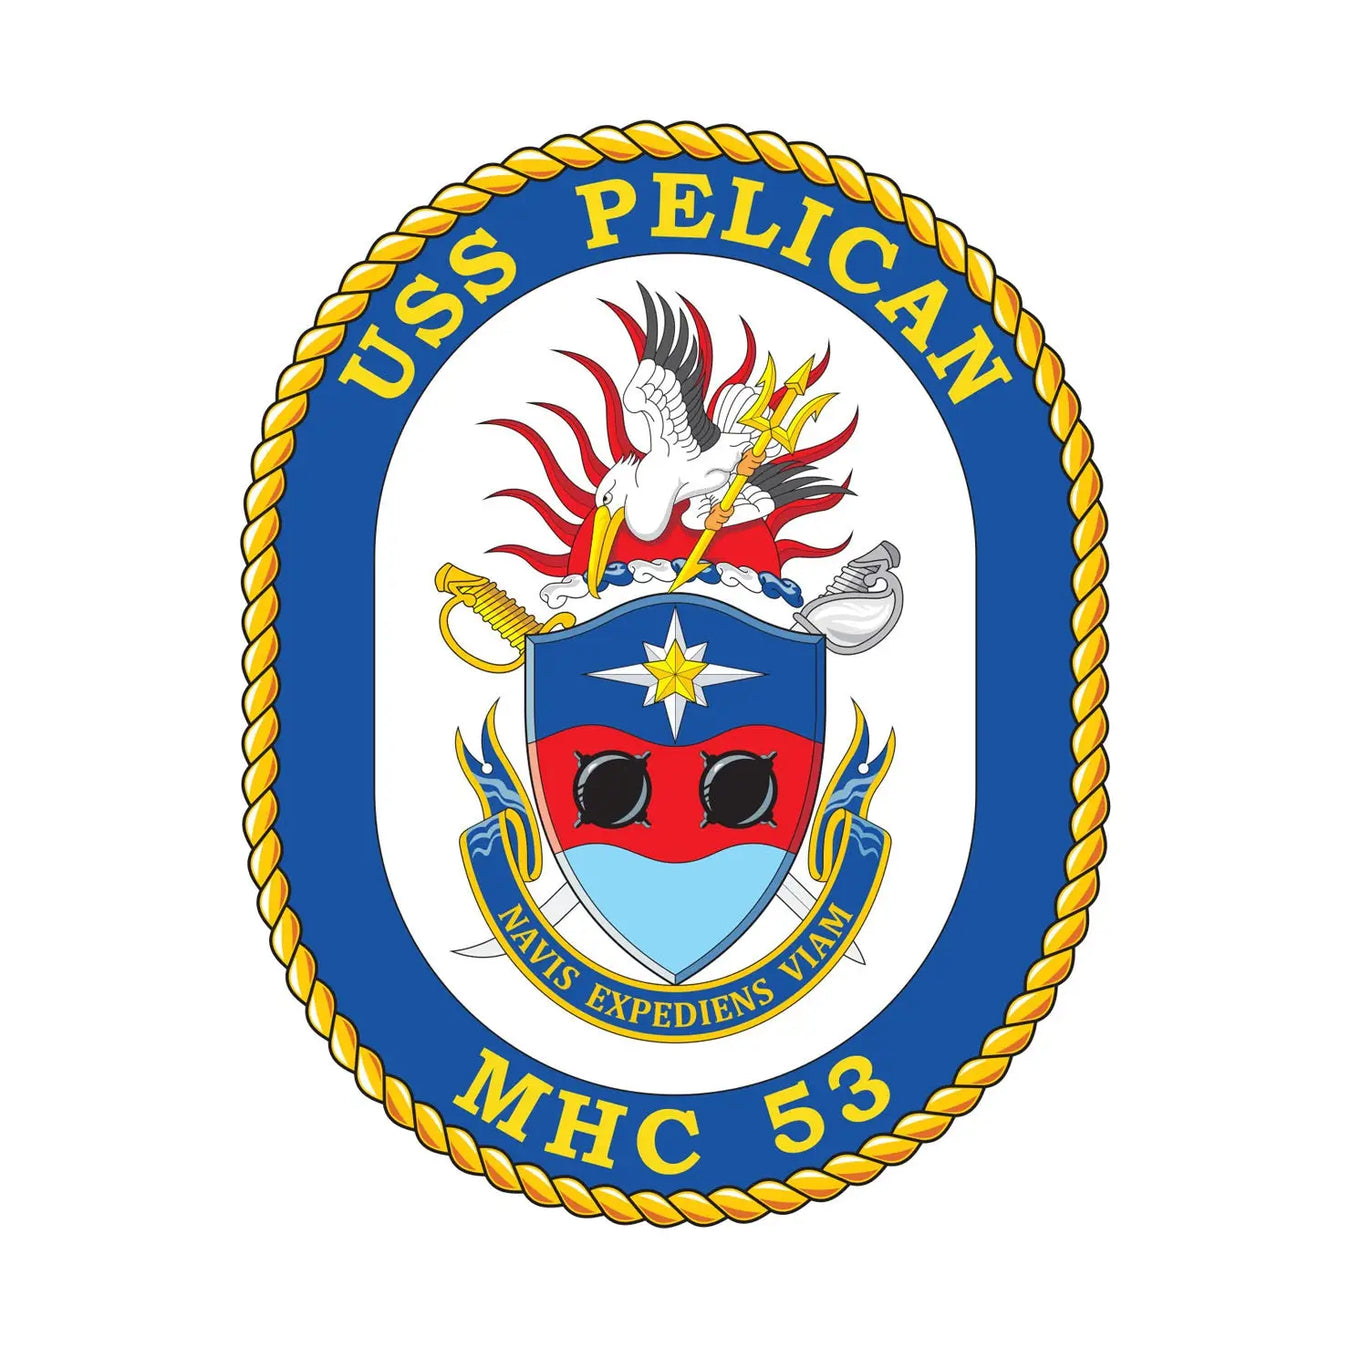 USS Pelican (MHC-53)